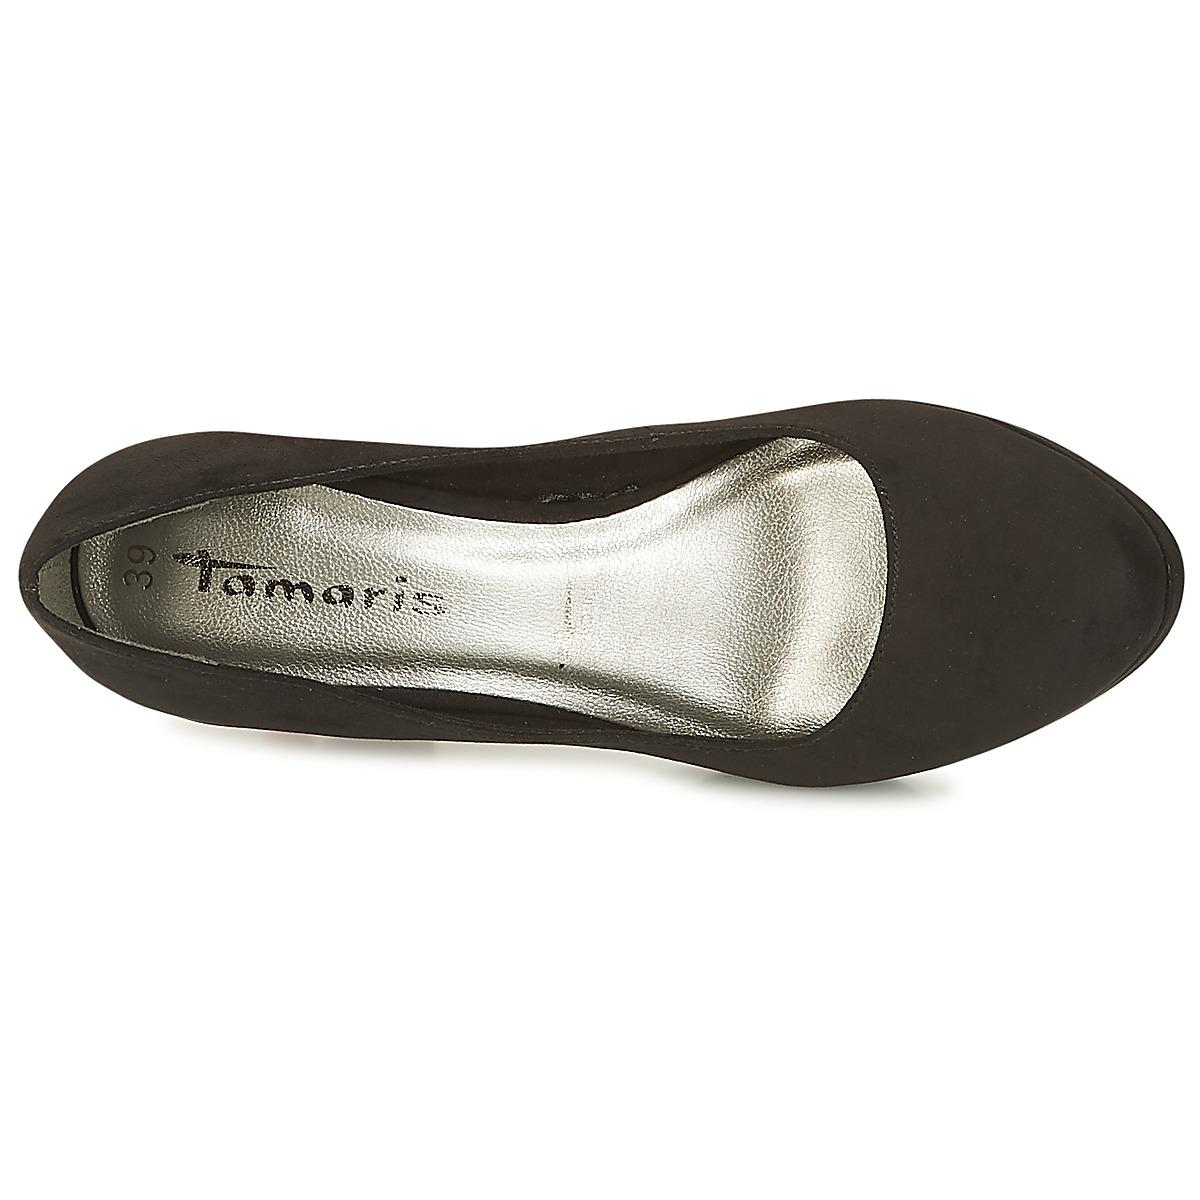 Tamaris Tacapin Women's Court Shoes In Black - Lyst